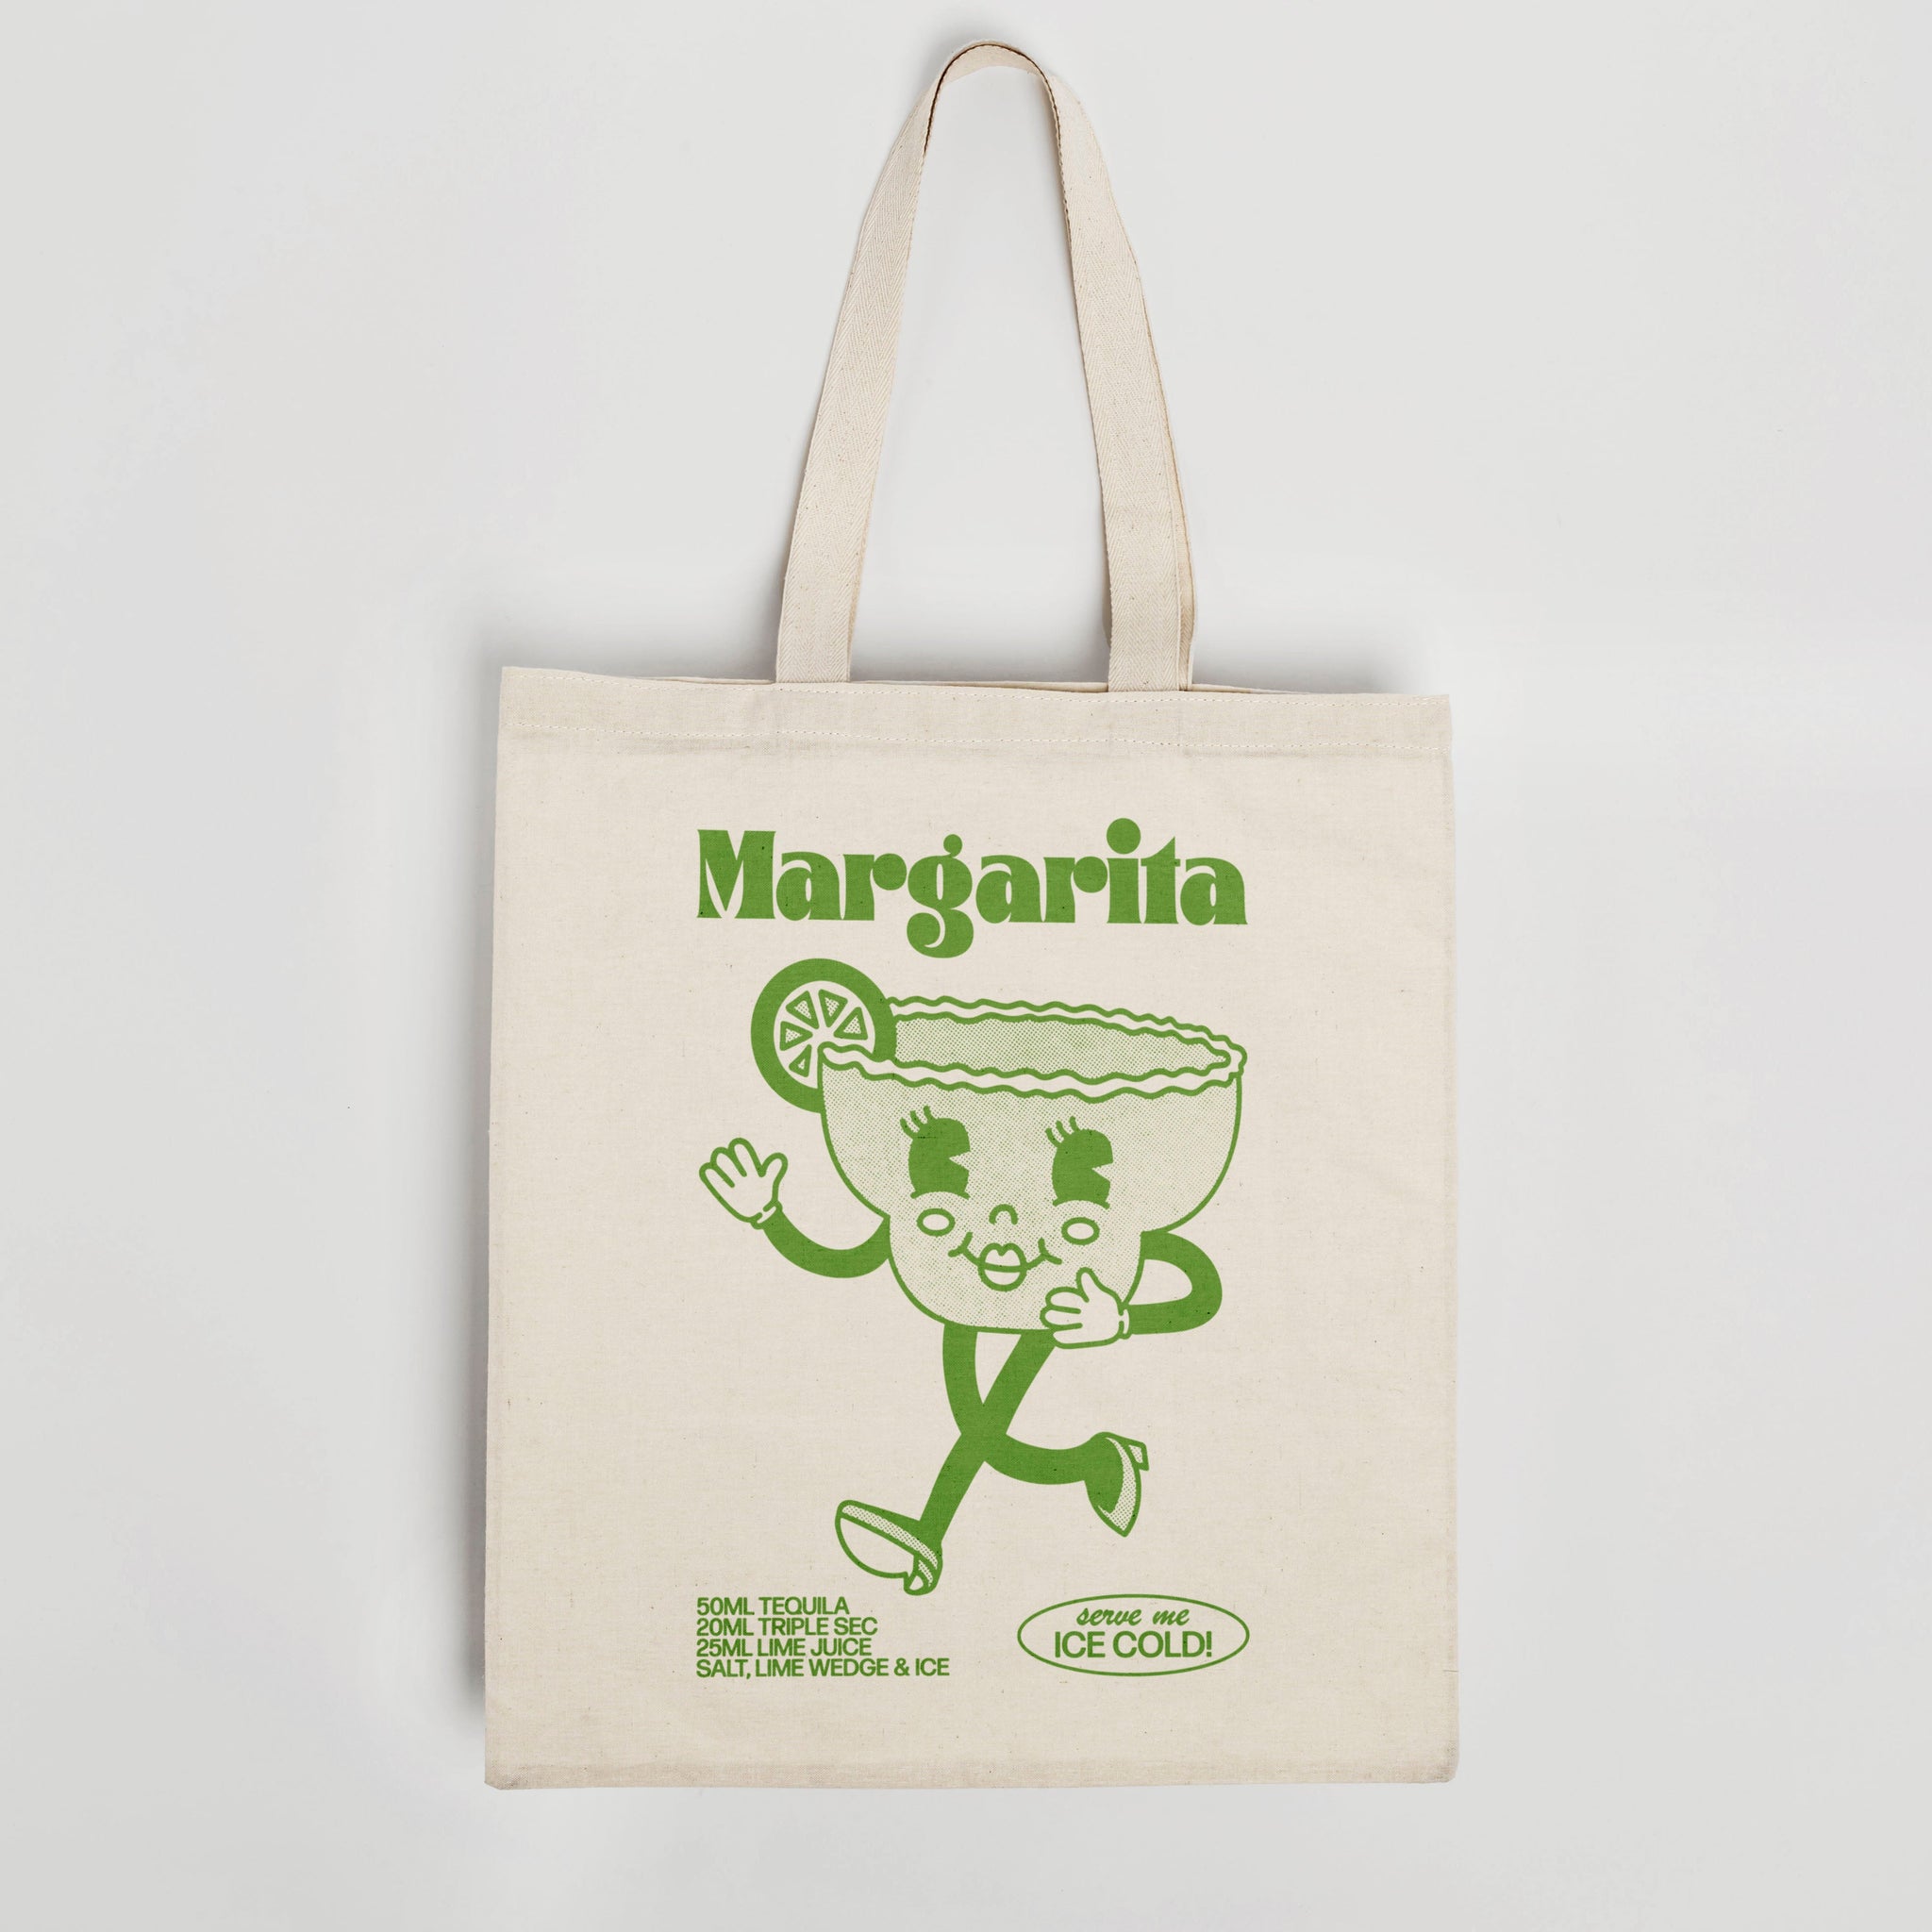 'Margarita' organic cotton canvas tote bag